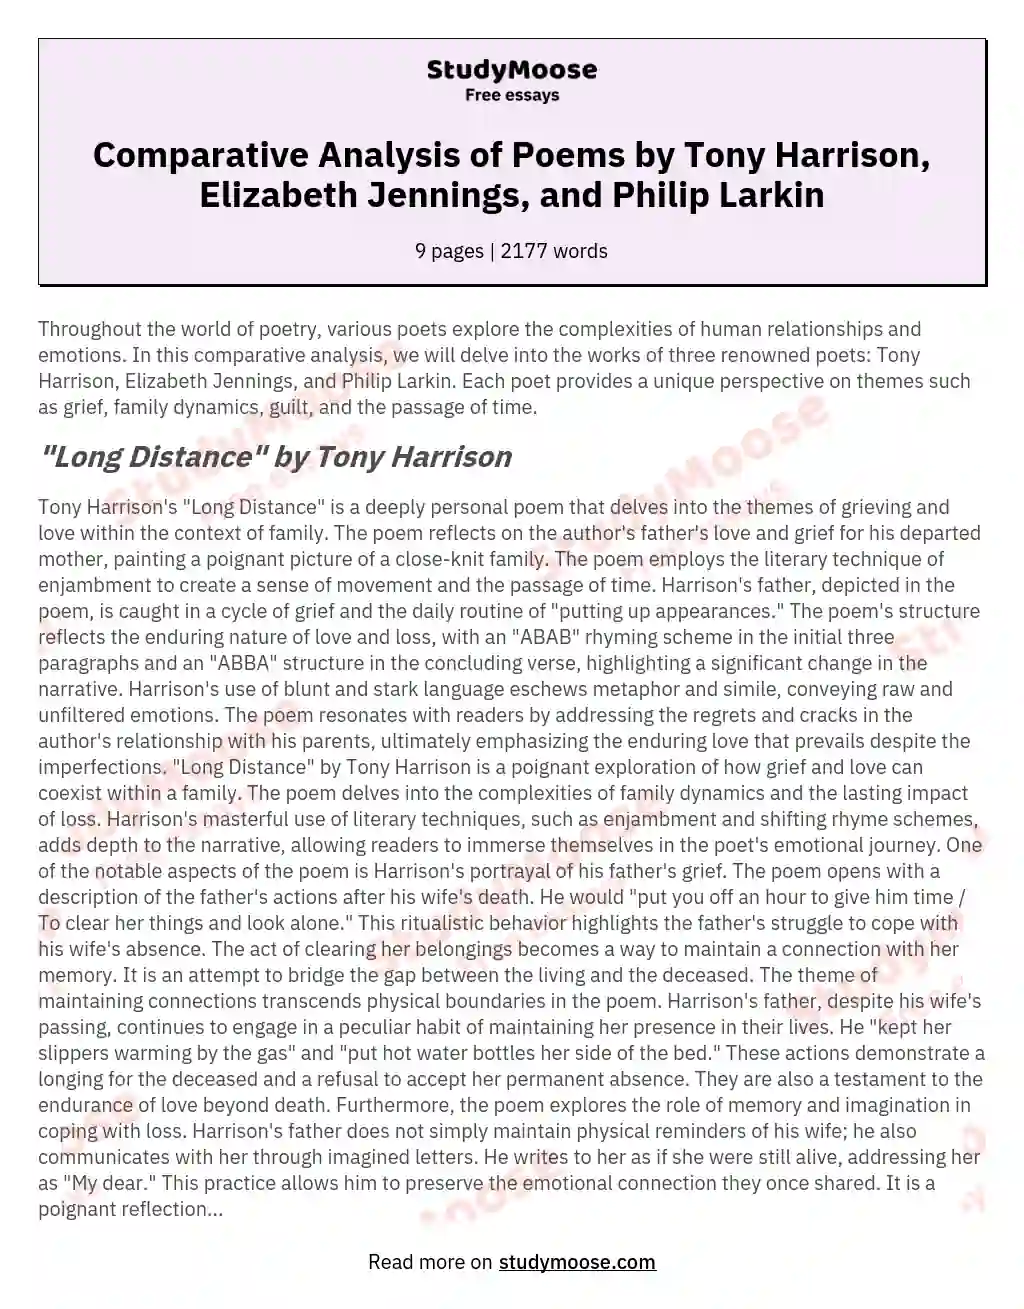 Comparative Analysis of Poems by Tony Harrison, Elizabeth Jennings, and Philip Larkin essay